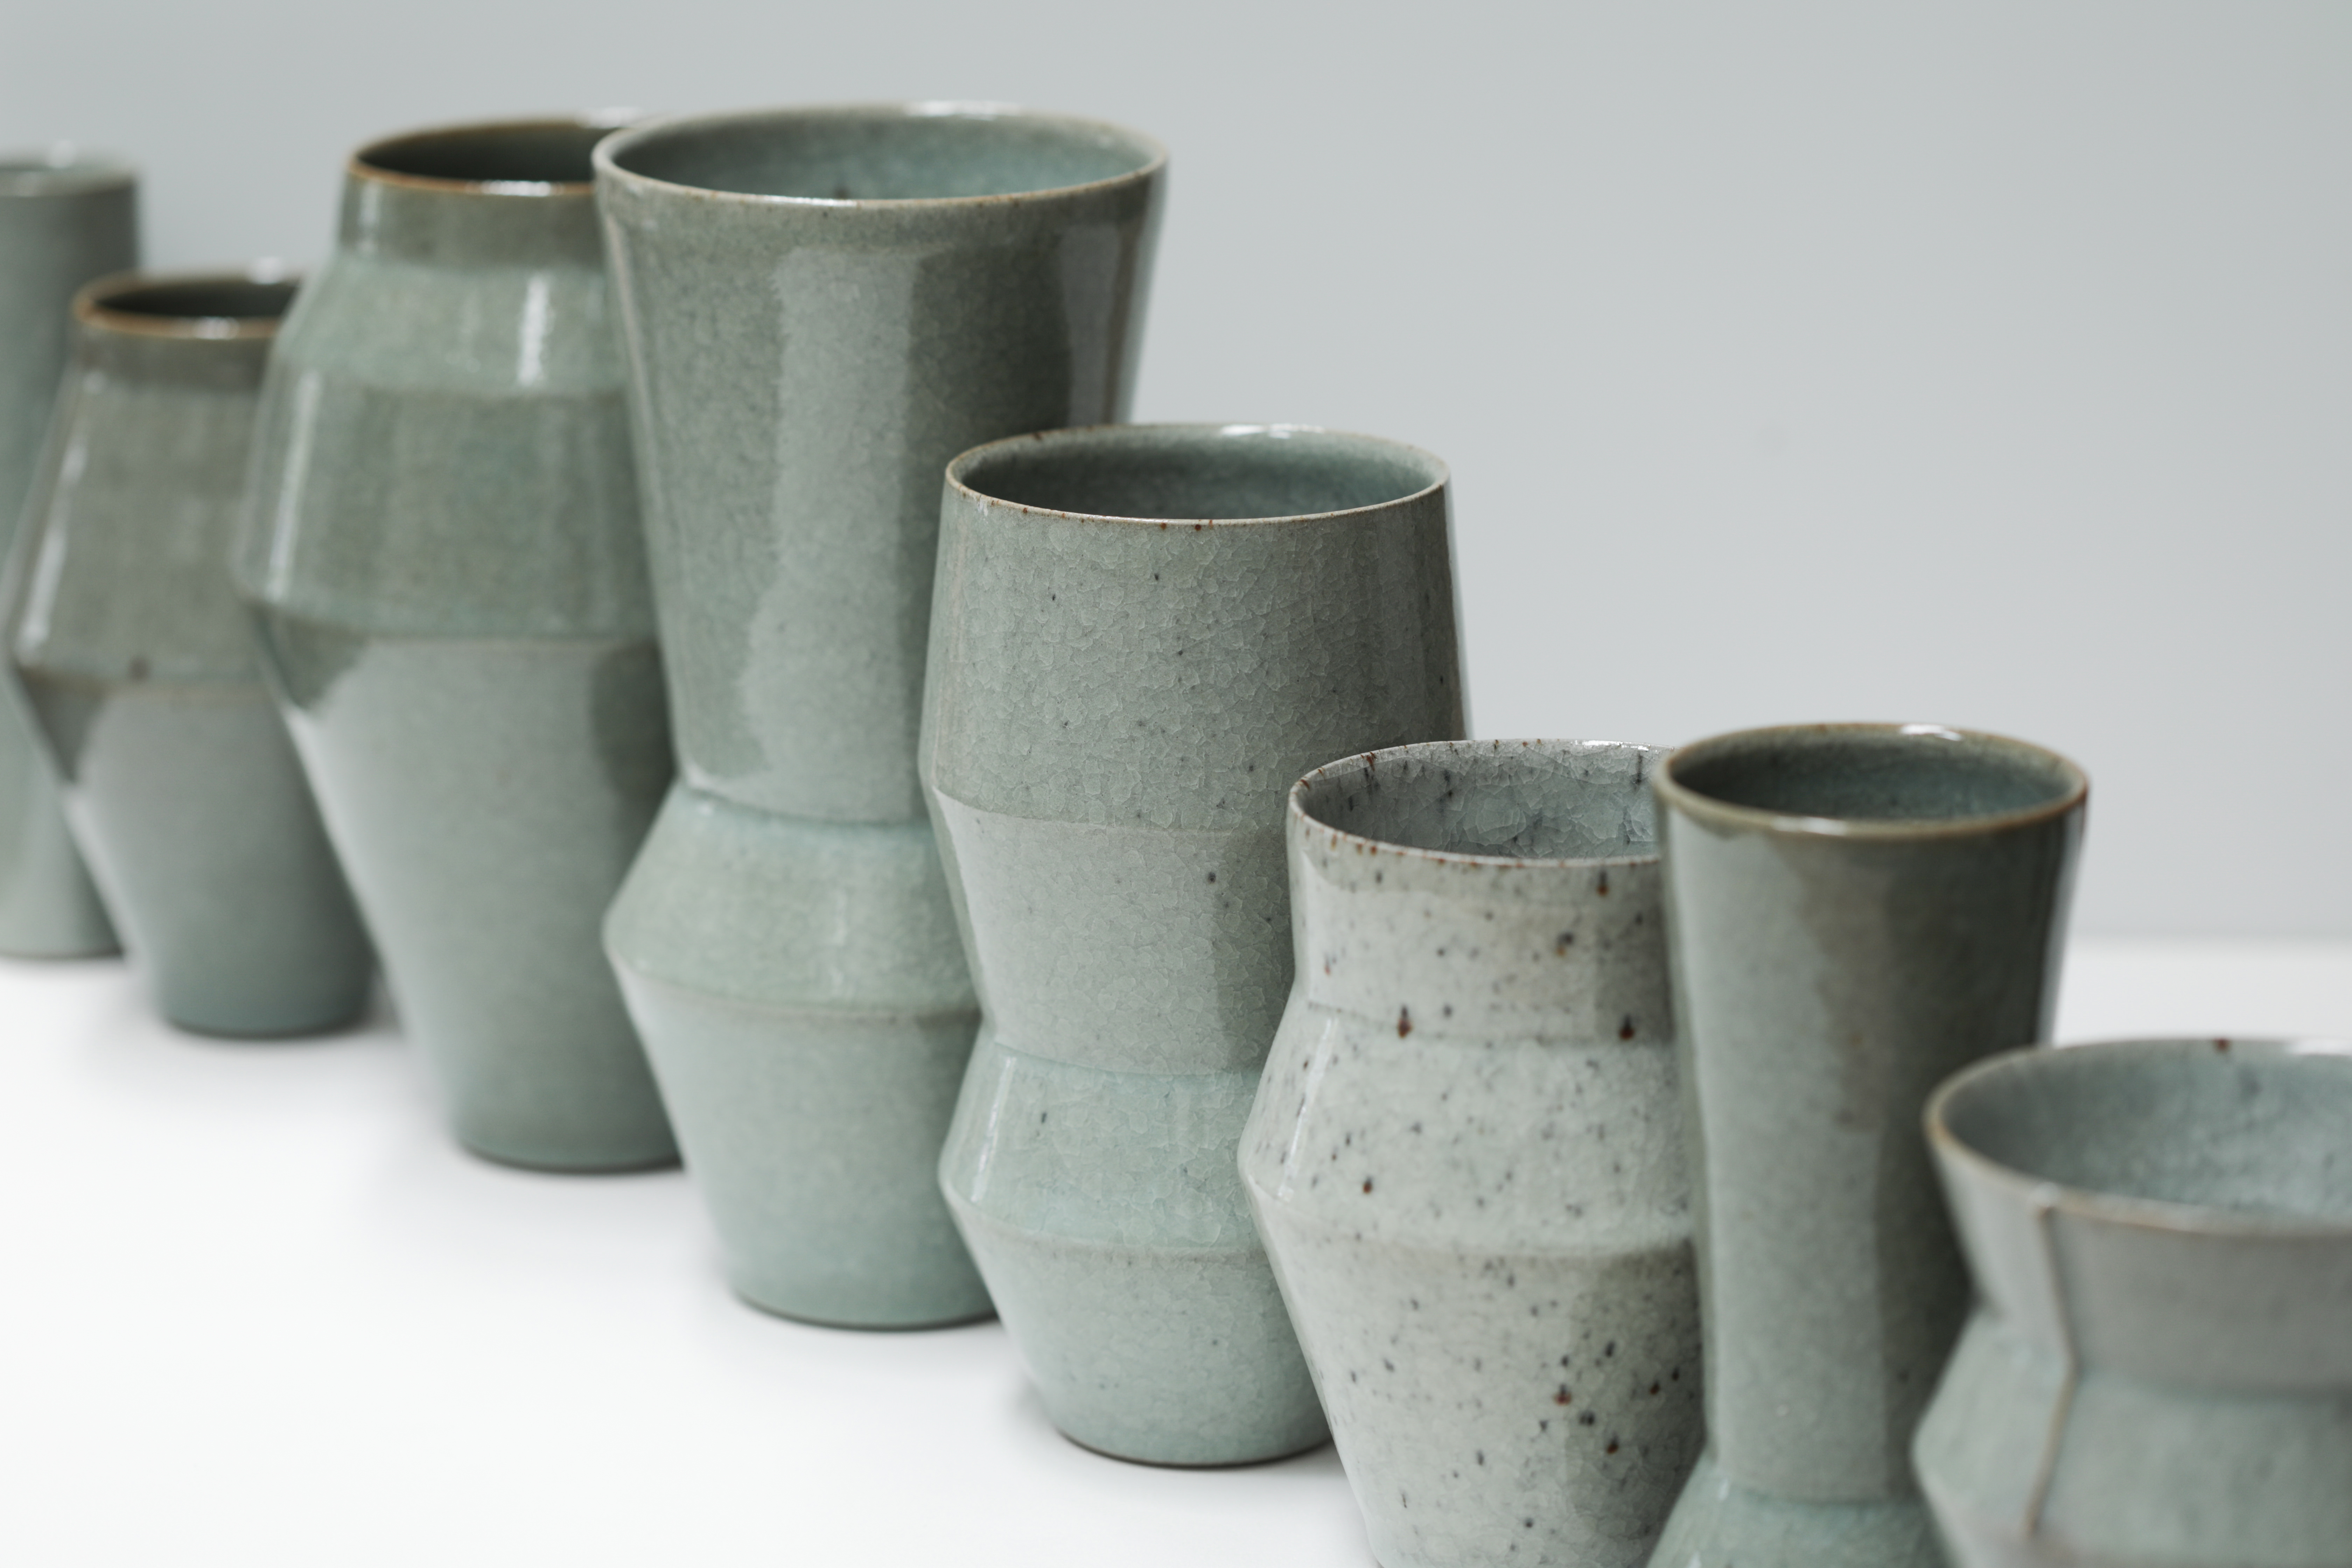 A diagonal row of green-toned ceramic vases